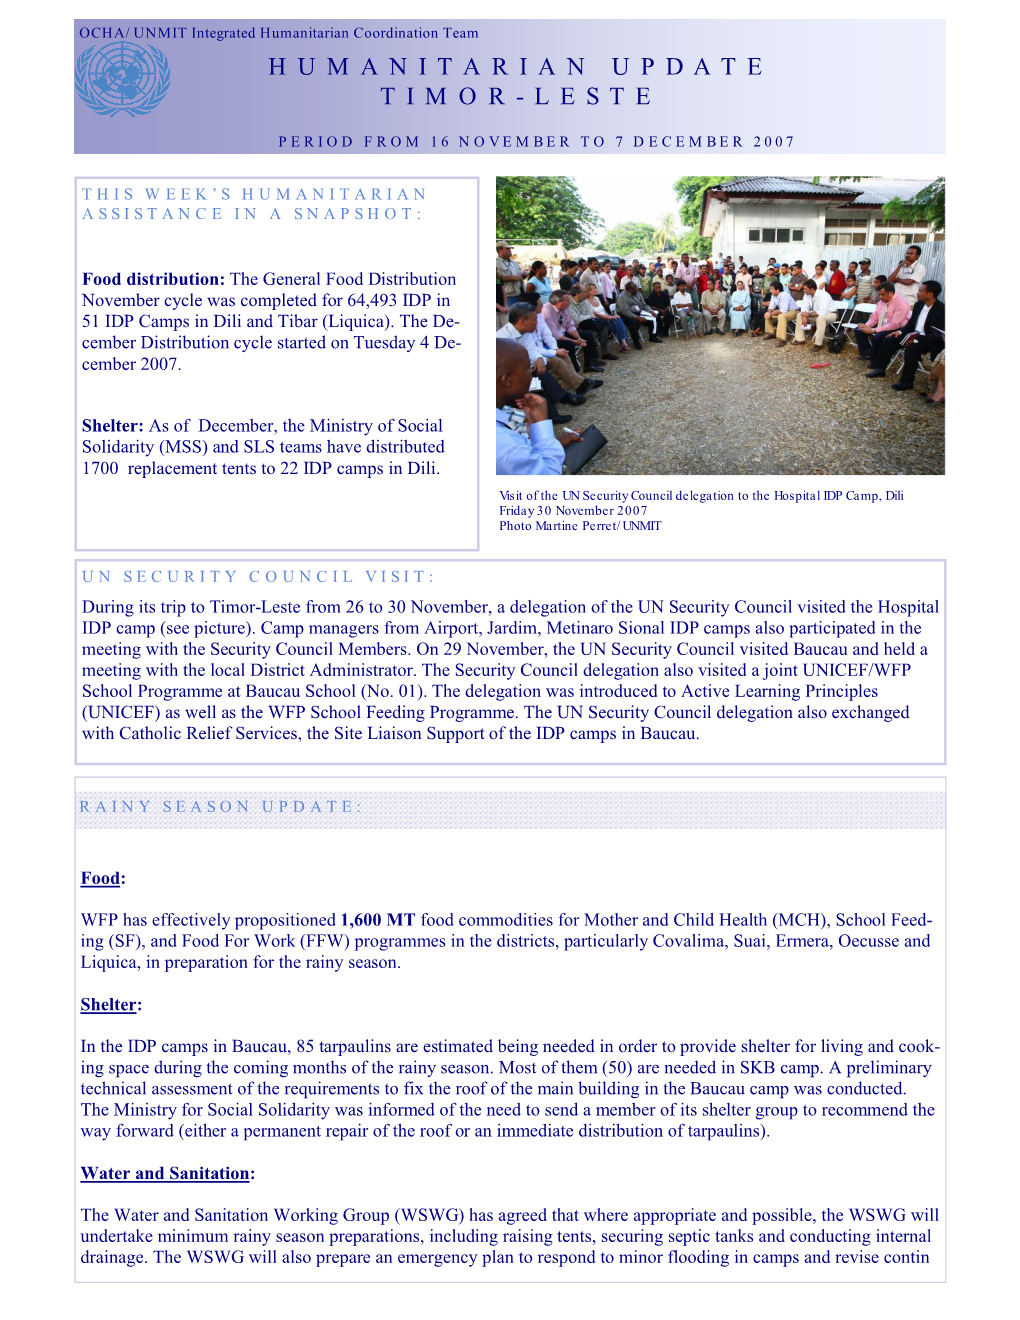 Humanitarian Update Timor-Leste